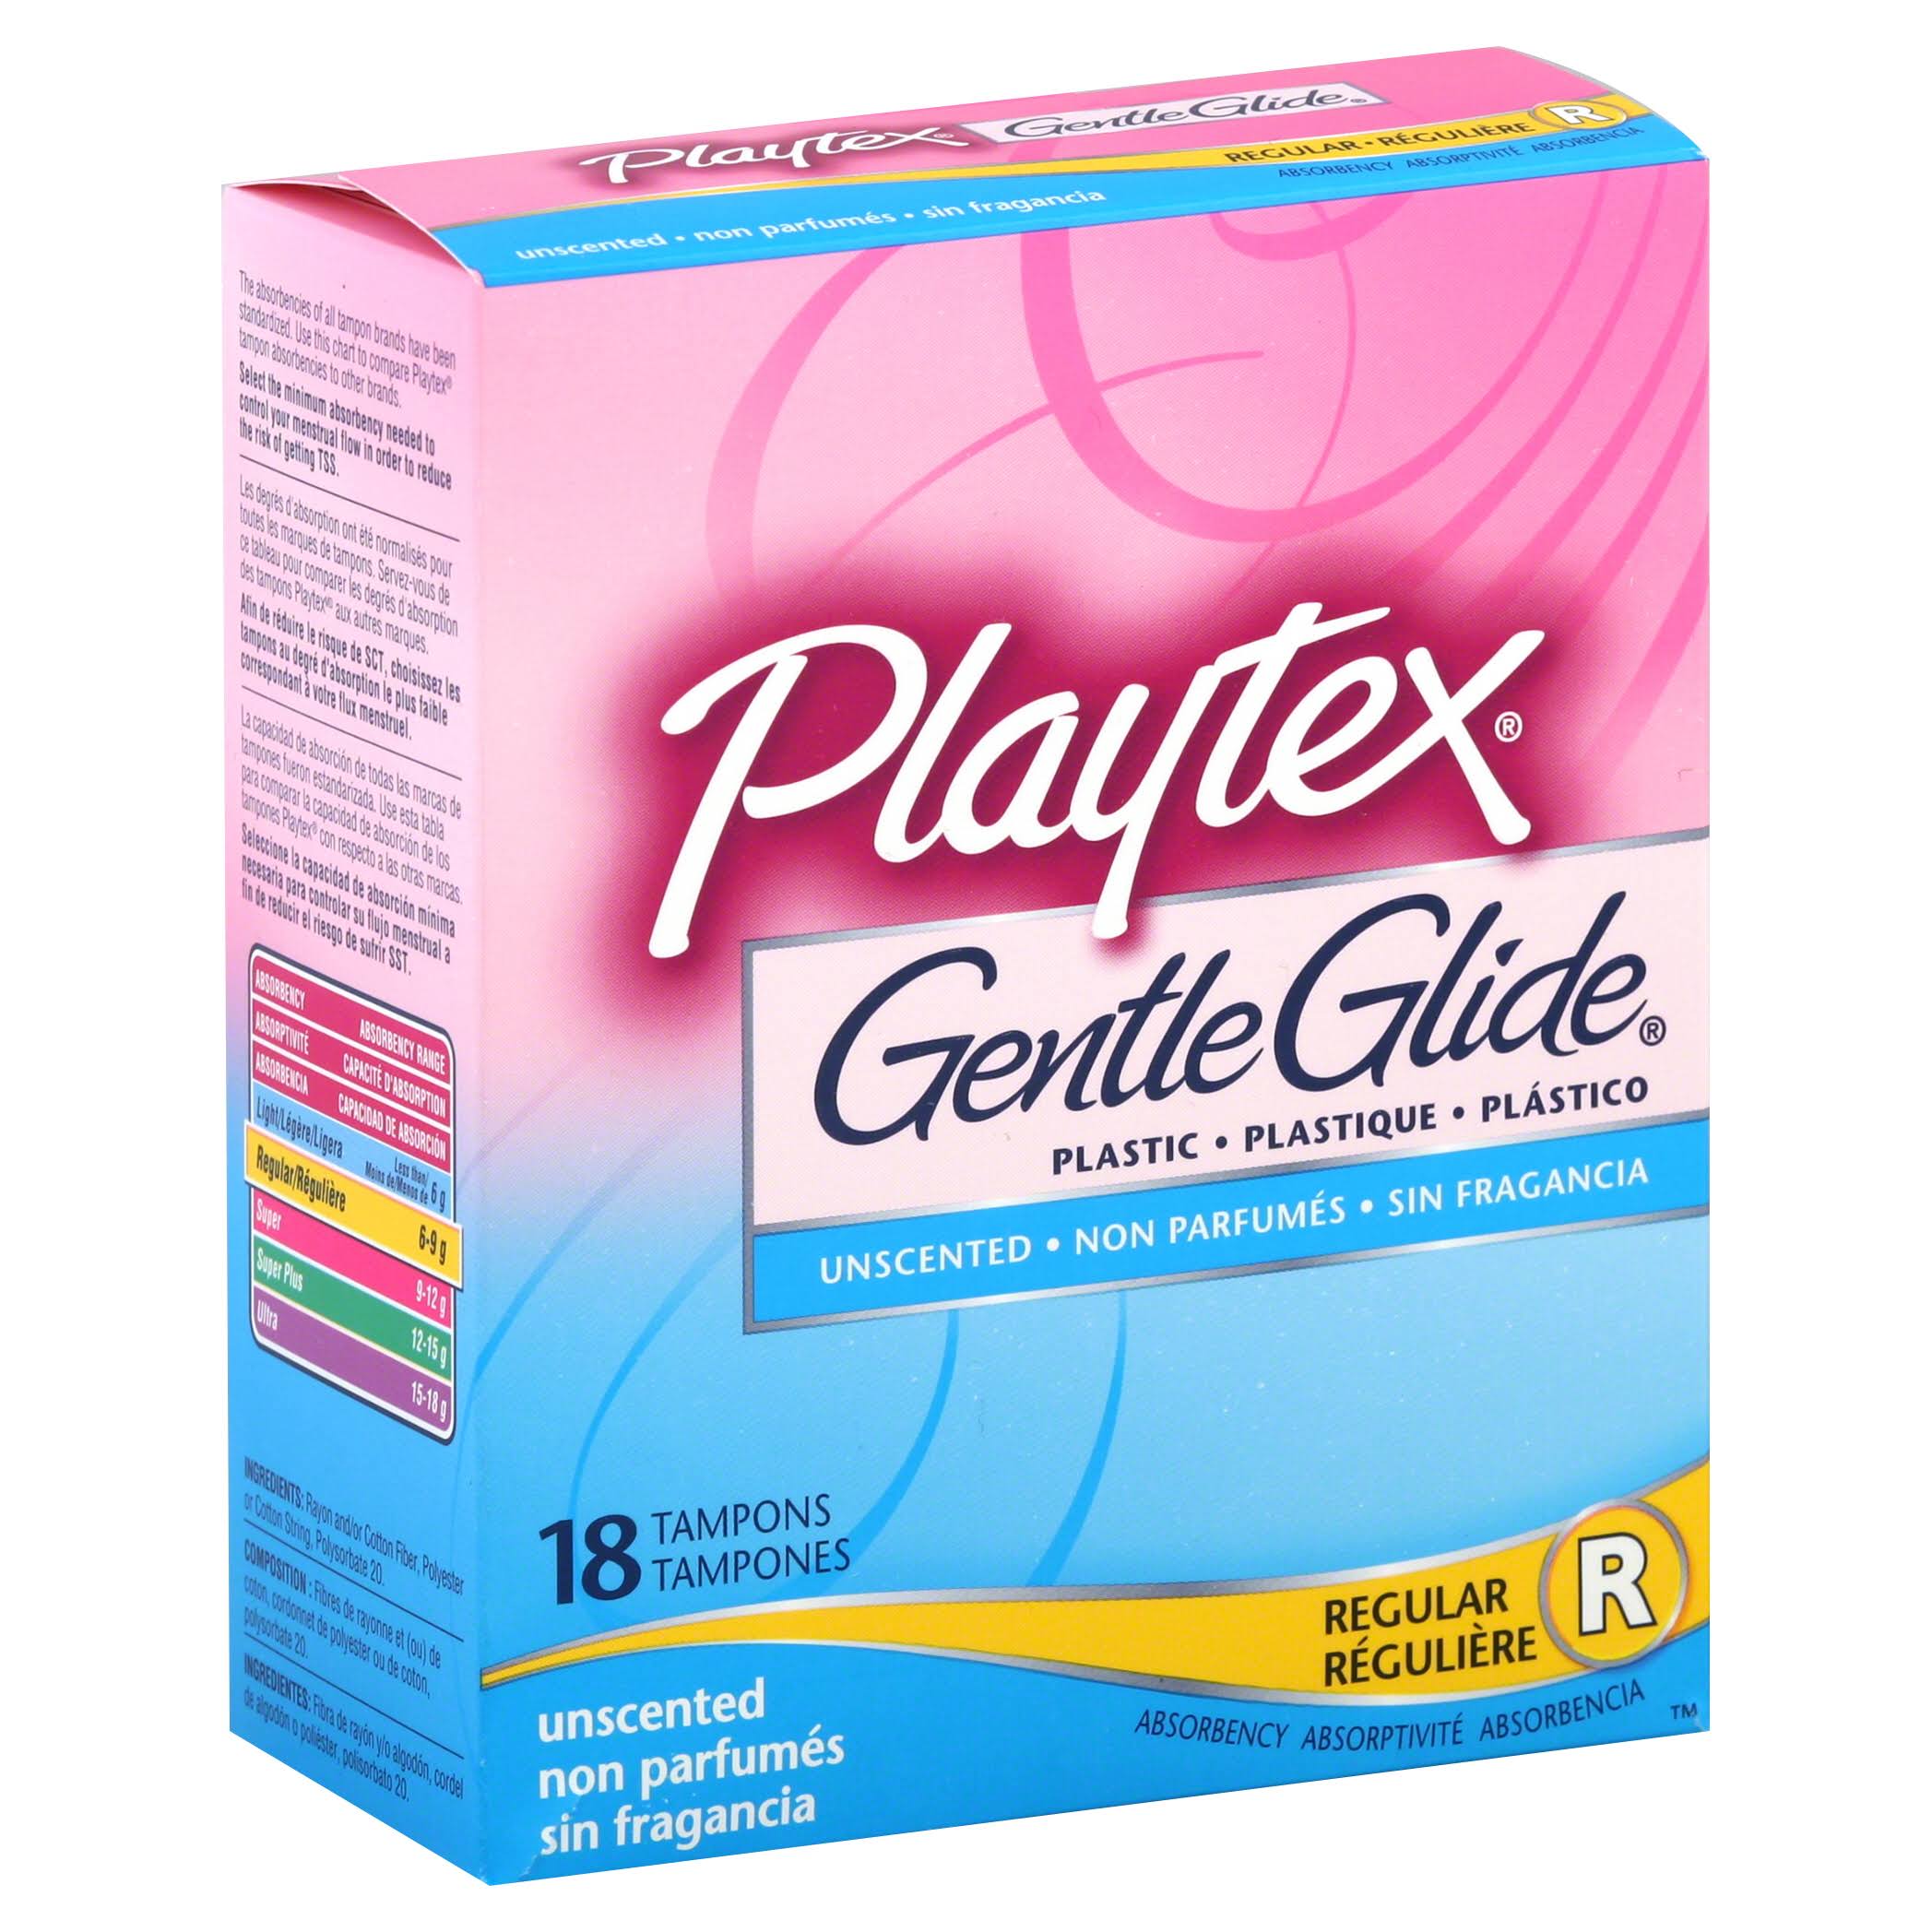 Playtex Gentle Glide 360 Tampons - Unscented, Regular, 20 ct